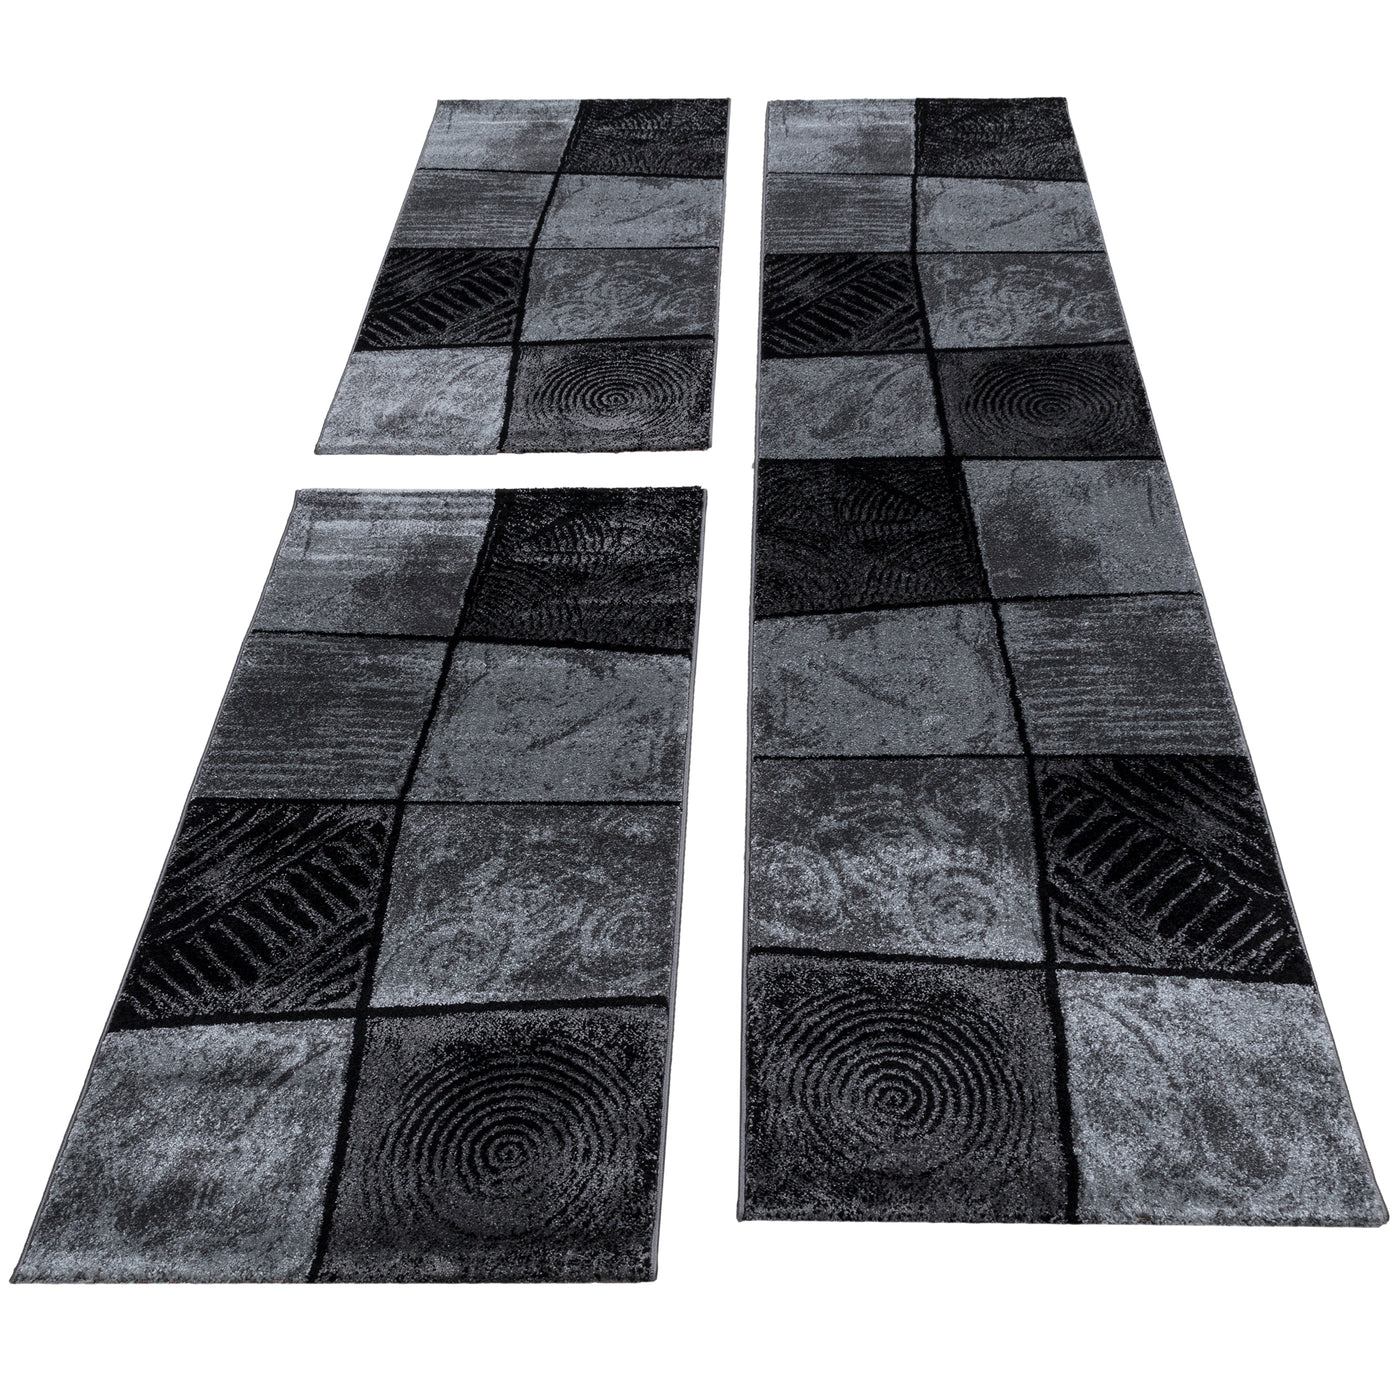 Bettumrandung Teppich abstrakt Karo Gemustert 3 teilig Läufer Set Schlafzimmer Flur Grau Schwarz meliert